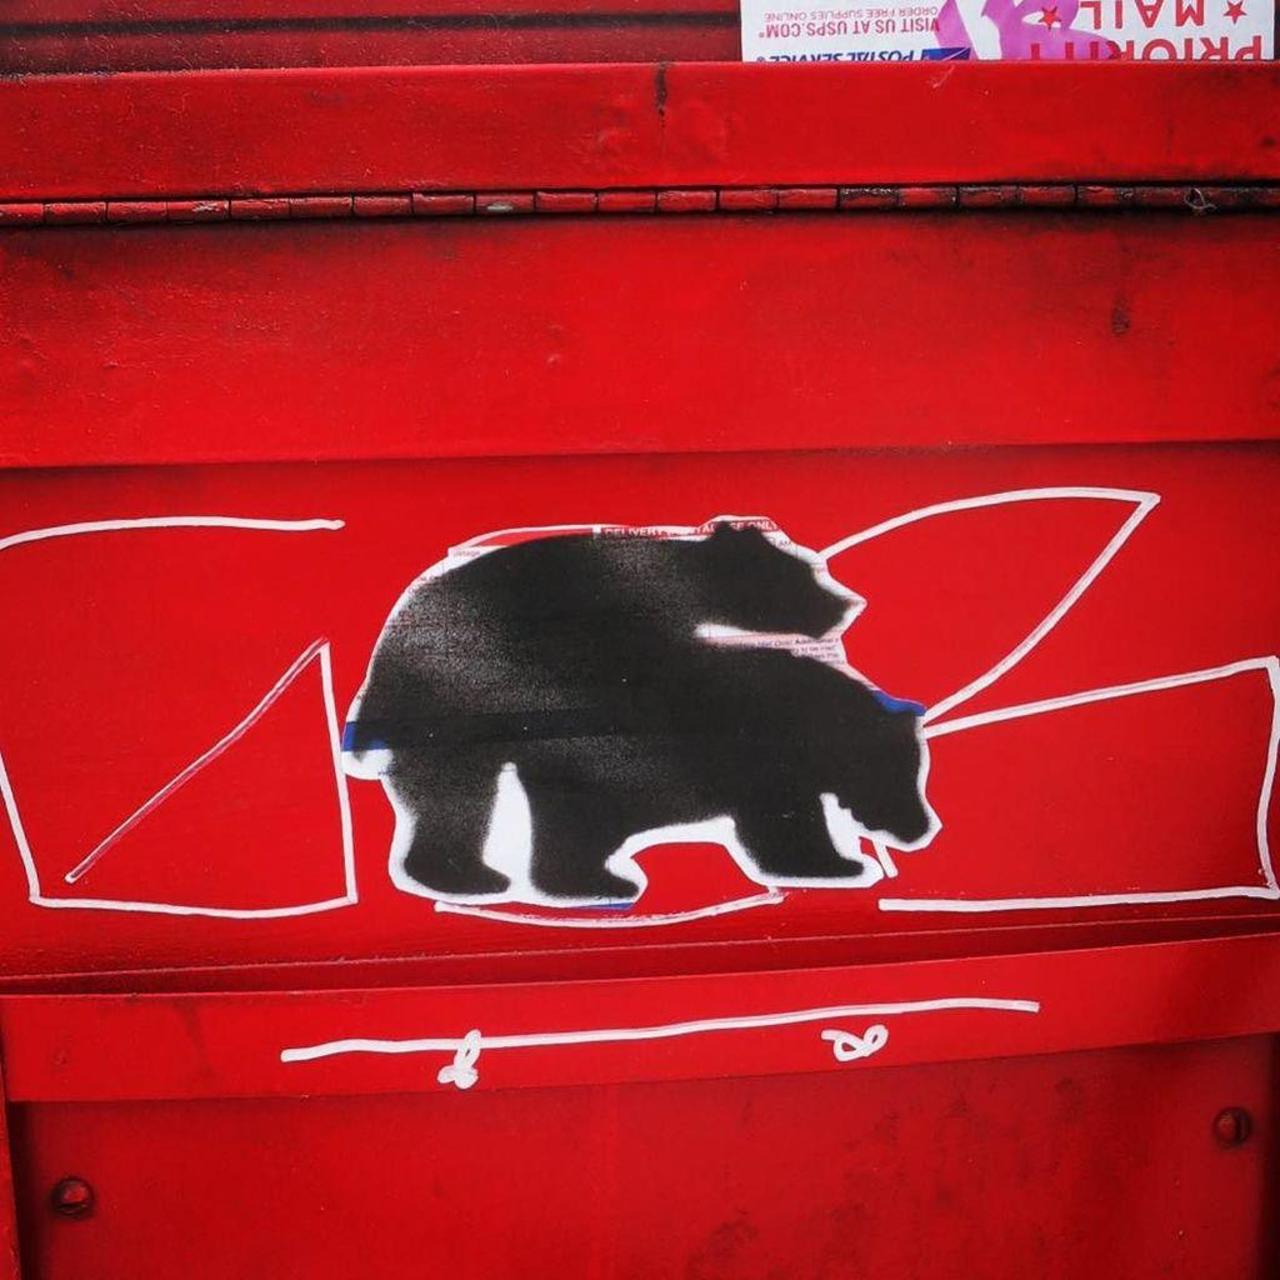 Friday's are a bear sometimes #streetart #graffiti #stickers #slaps #sfstreetart #bears http://bit.ly/1VWHvXu http://t.co/CevEq8ePnr